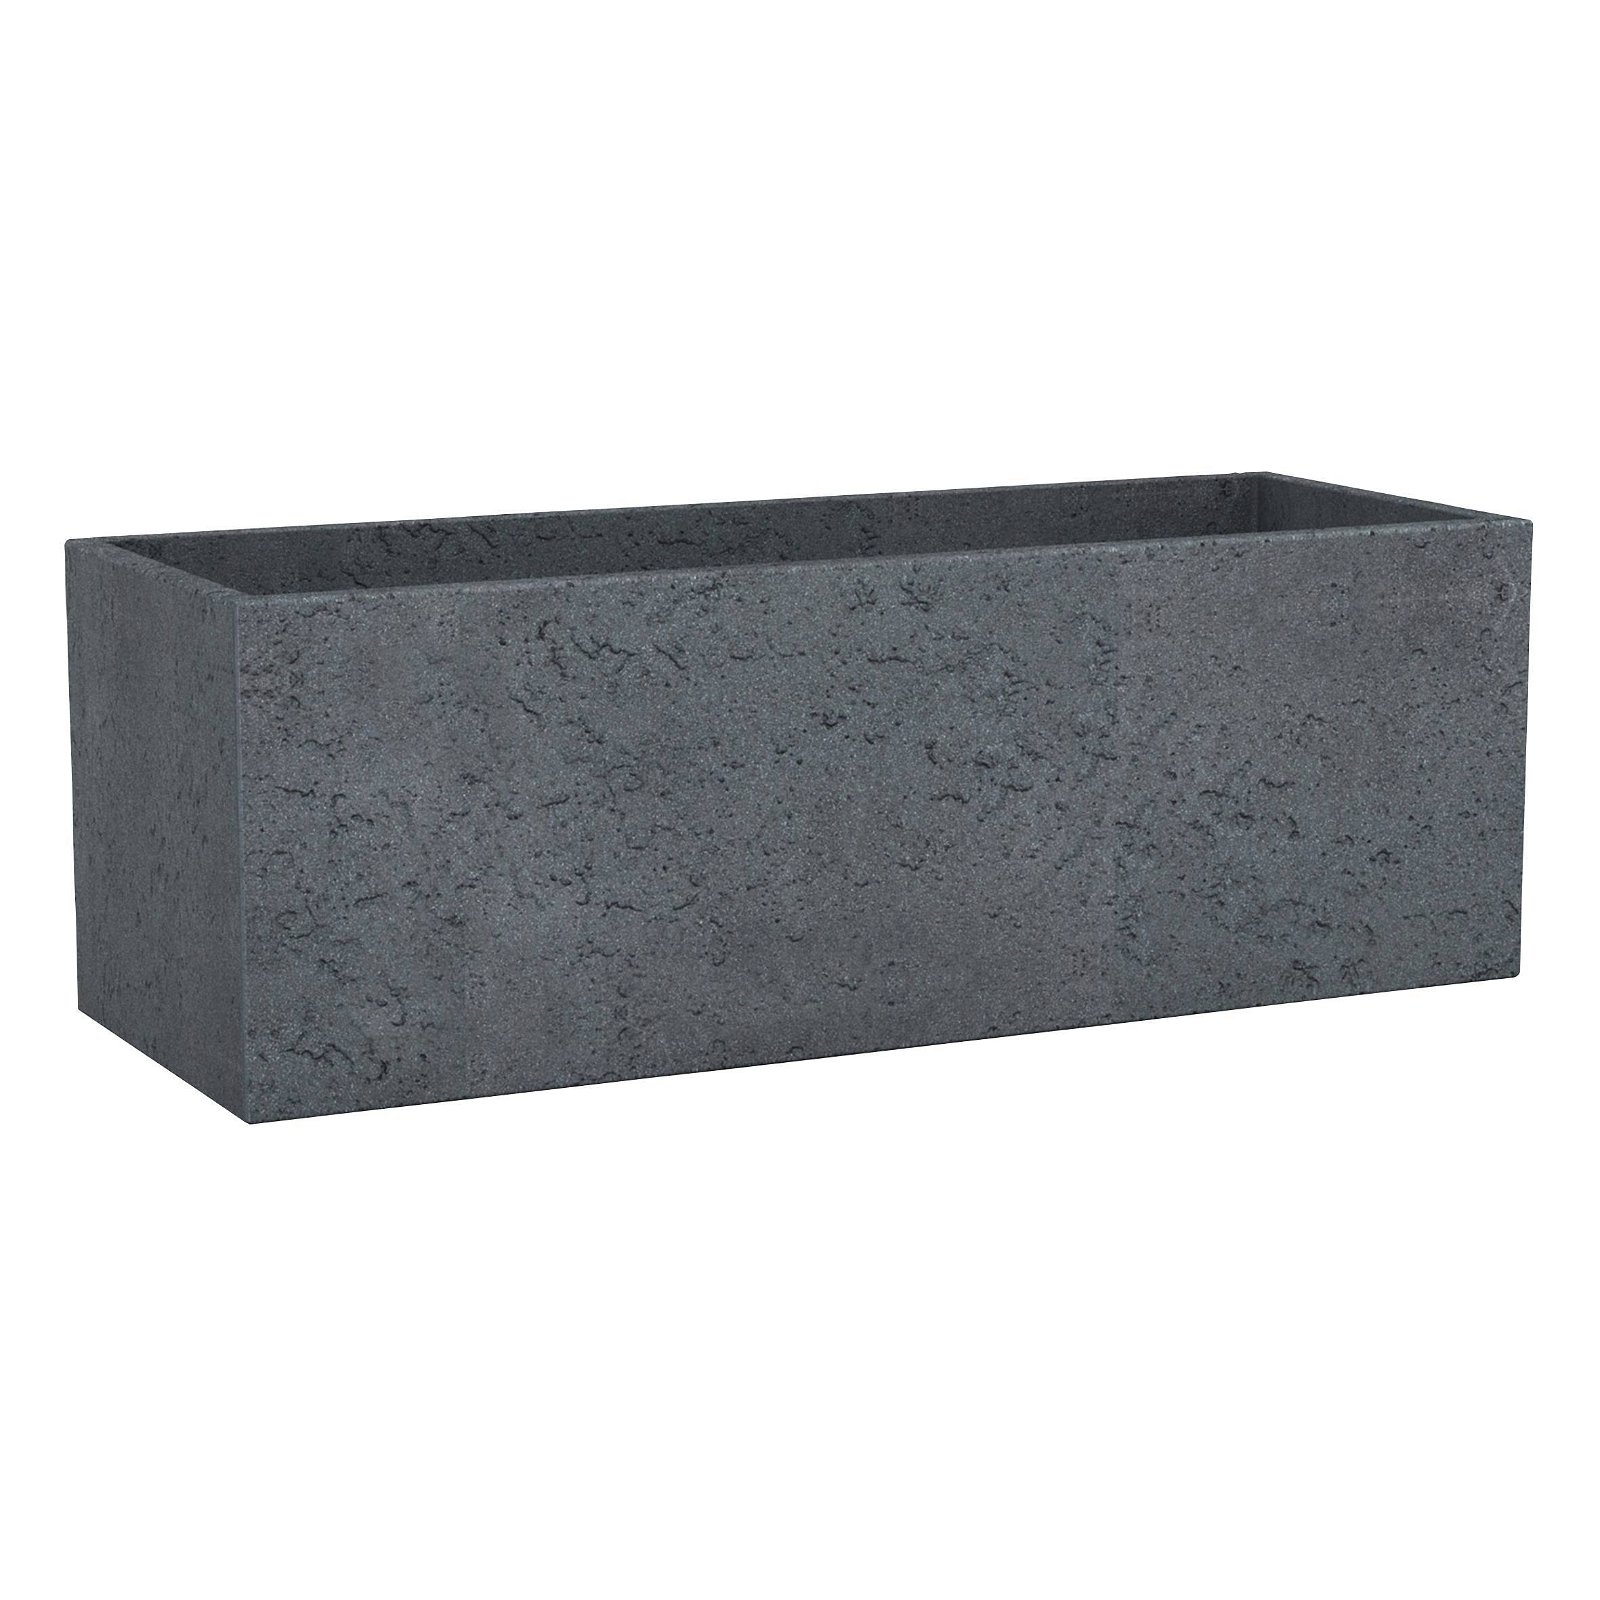 Pflanzkübel 'C-Cube Long', Stony Black, 79 x 29 x H 27,5 cm, 35 Liter